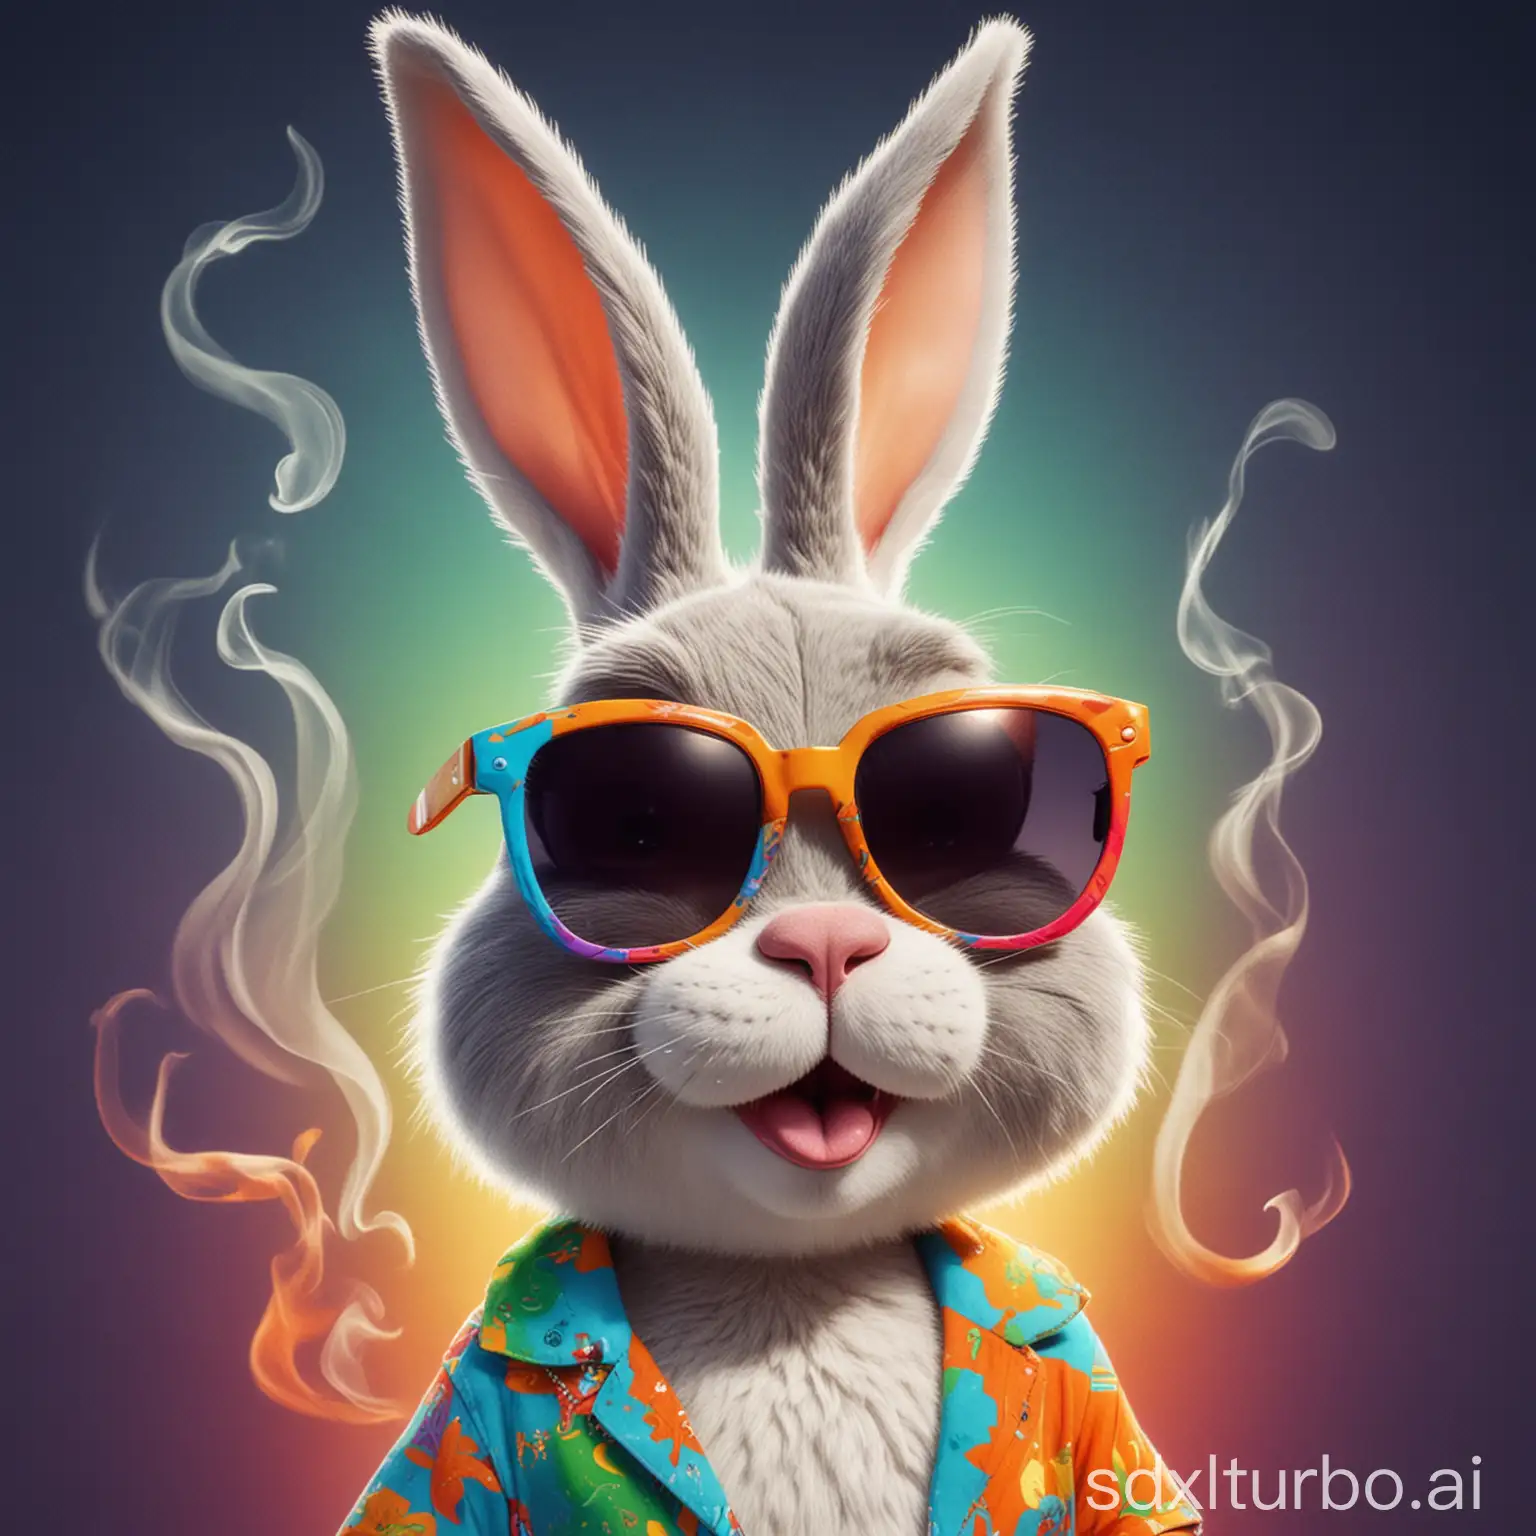 Happy-Psychedelic-Rabbit-Cartoon-in-Sunglasses-Smoking